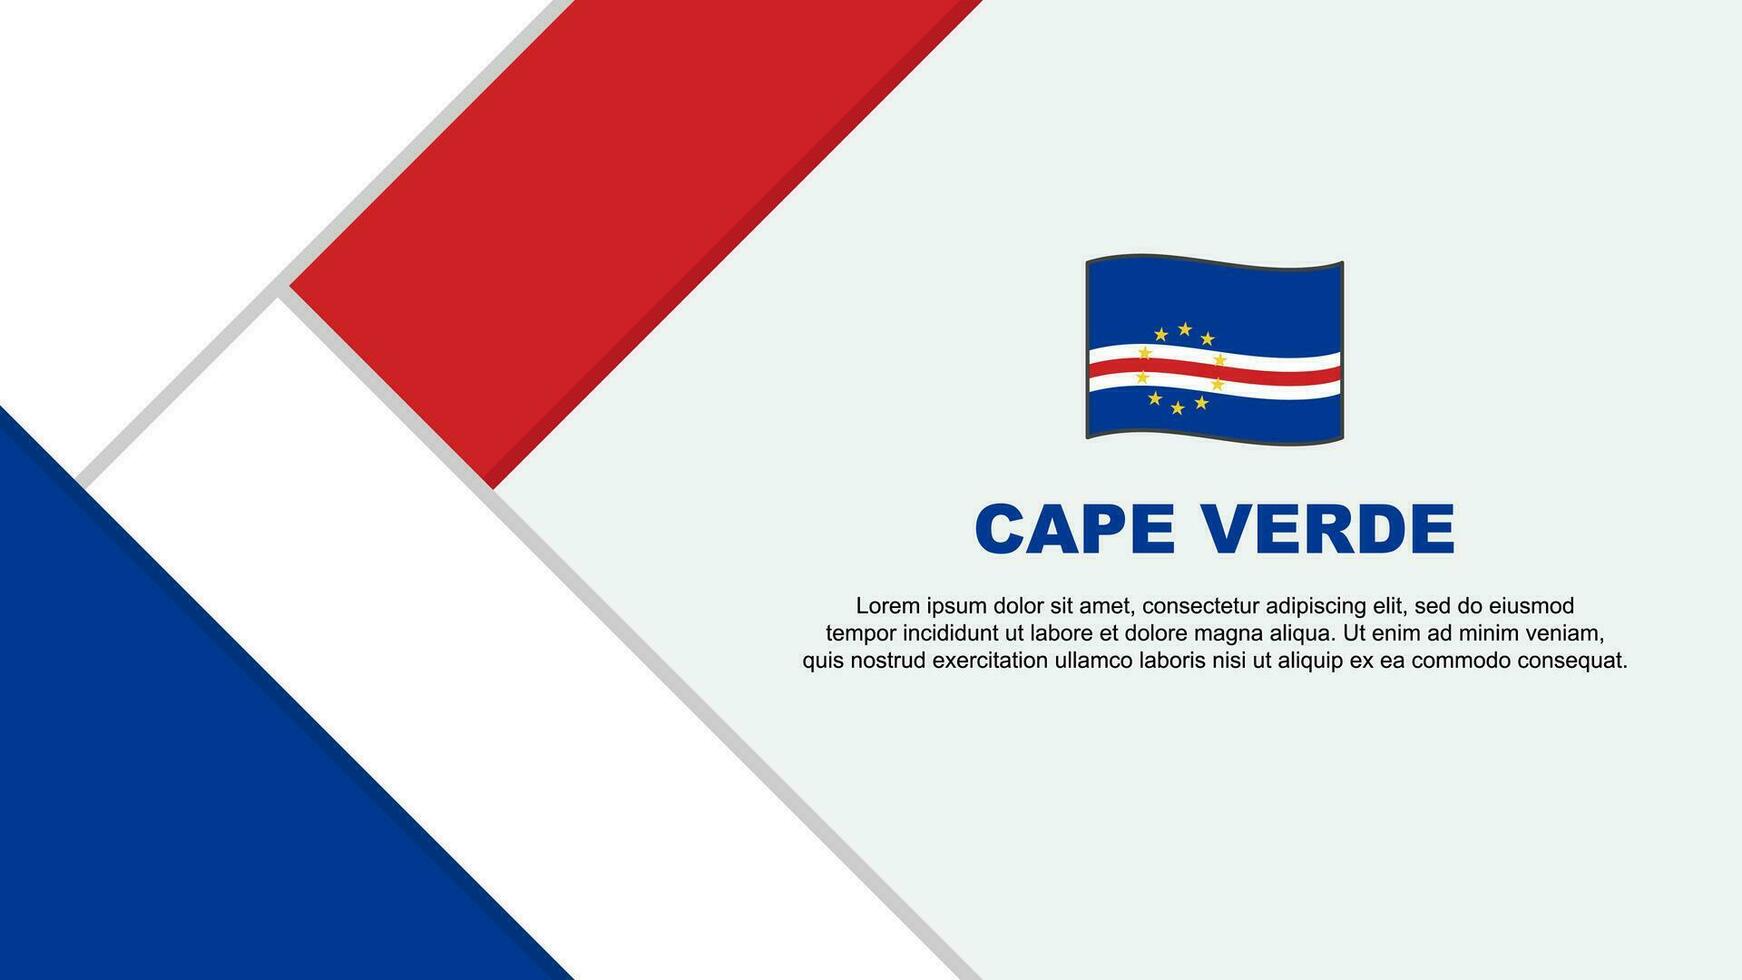 Cape Verde Flag Abstract Background Design Template. Cape Verde Independence Day Banner Cartoon Vector Illustration. Cape Verde Illustration